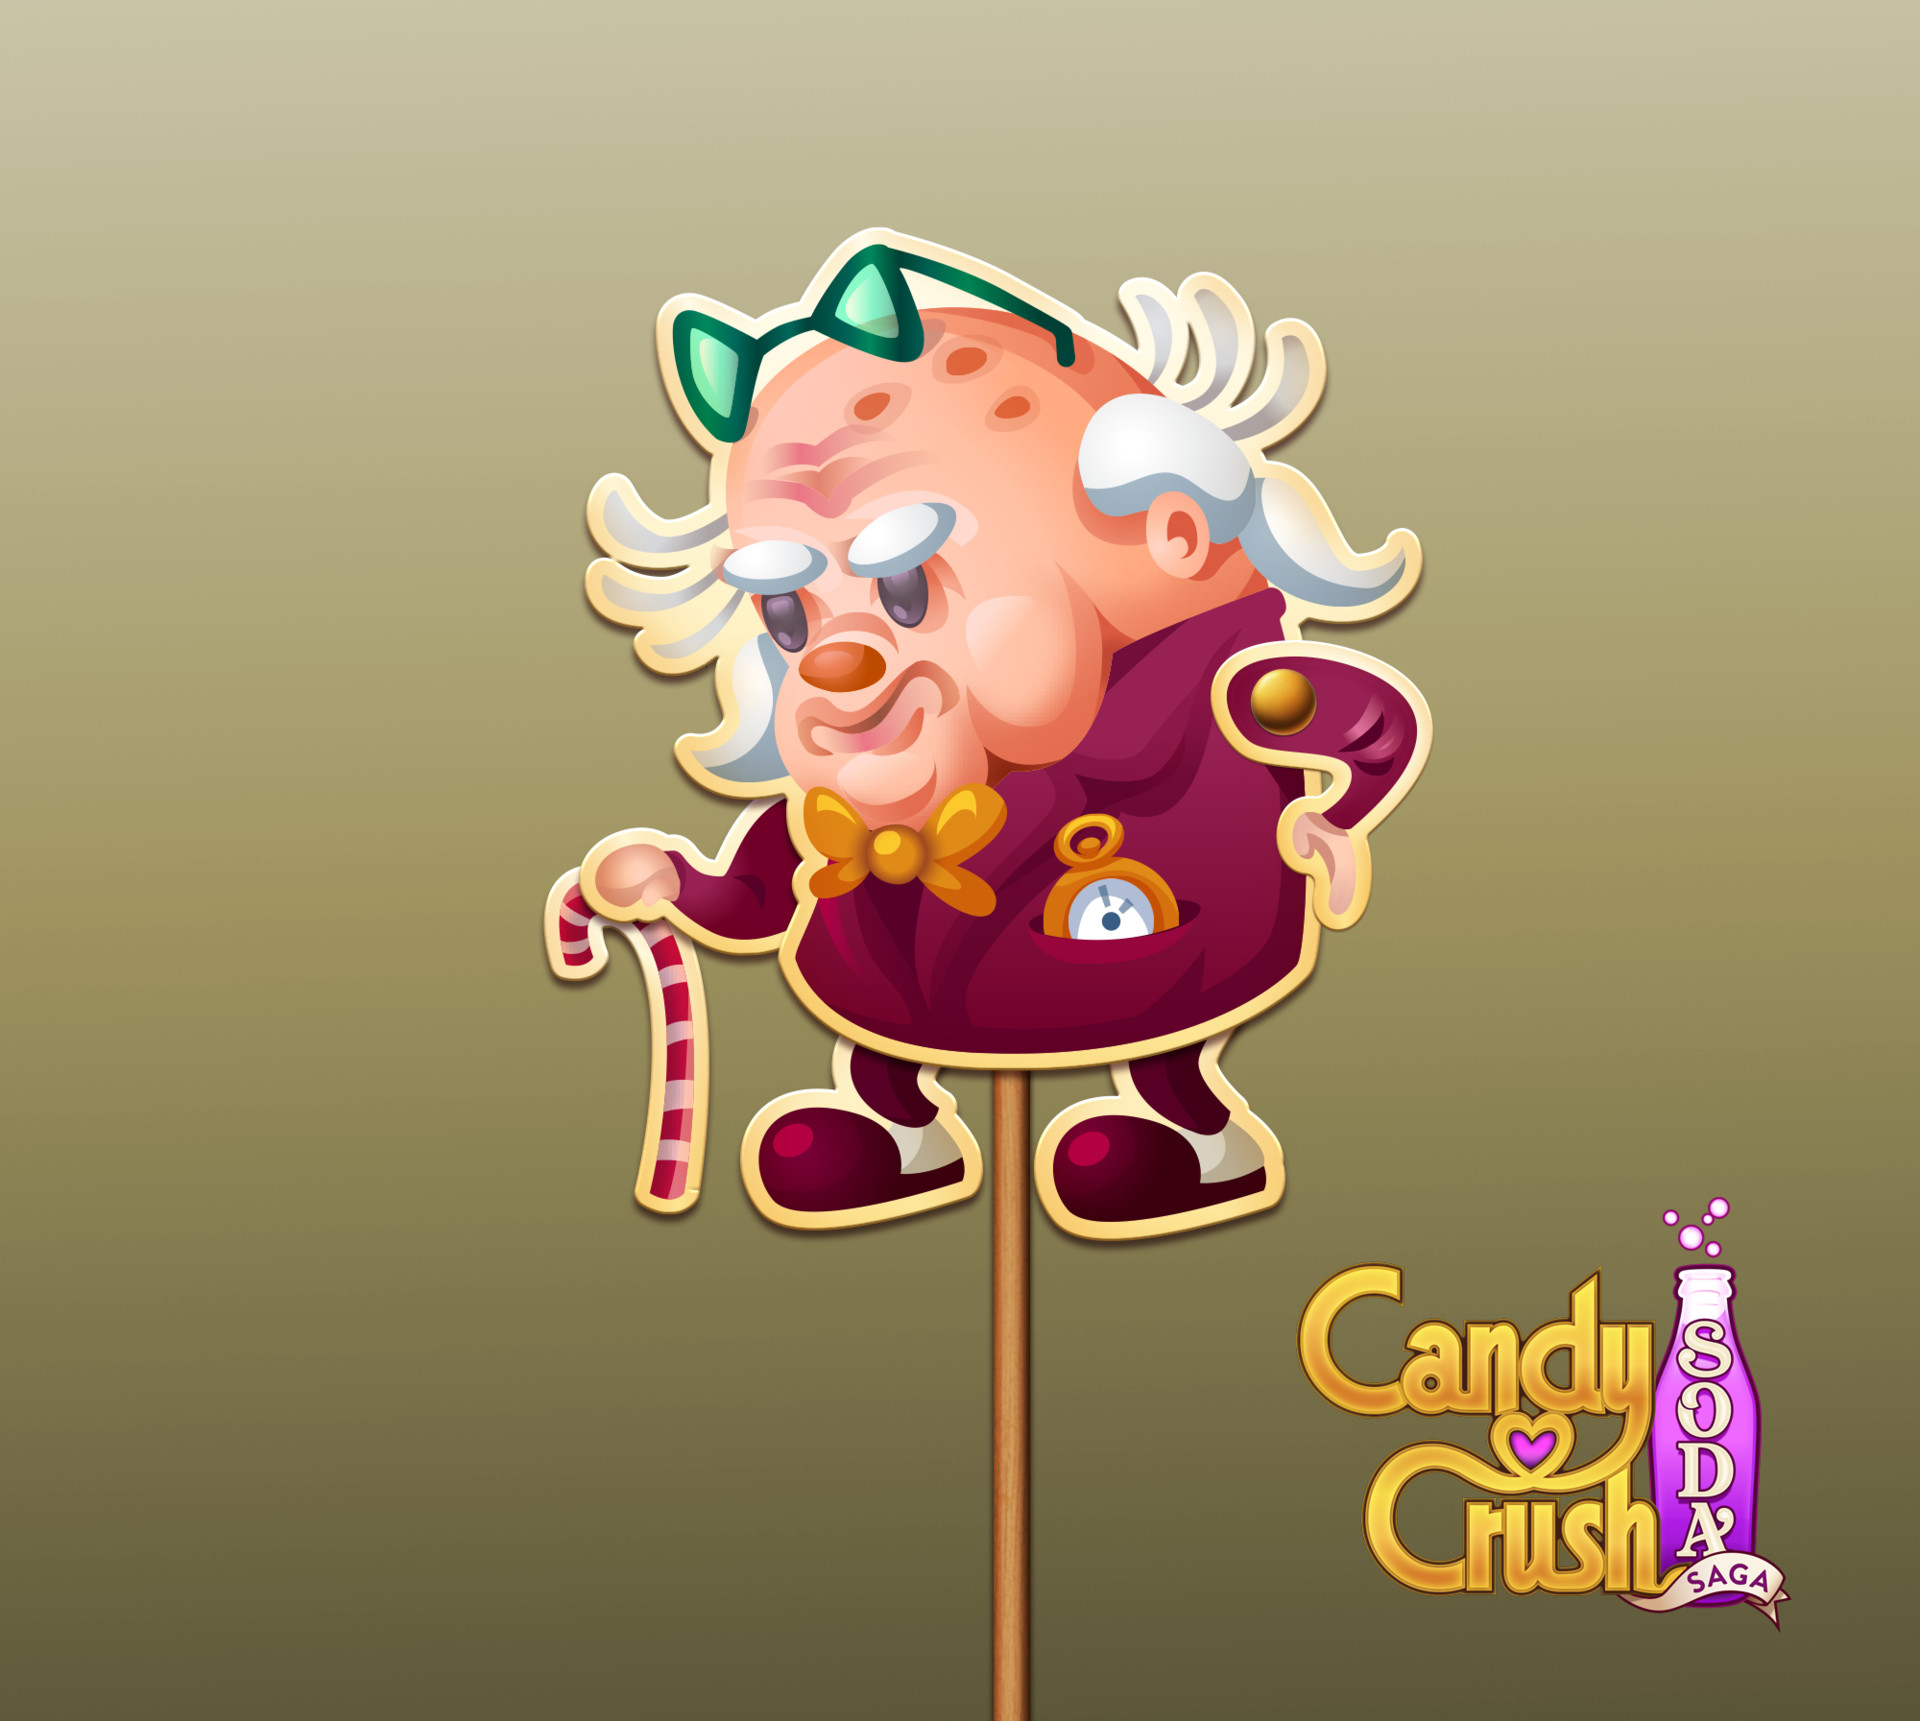 candy crush saga character